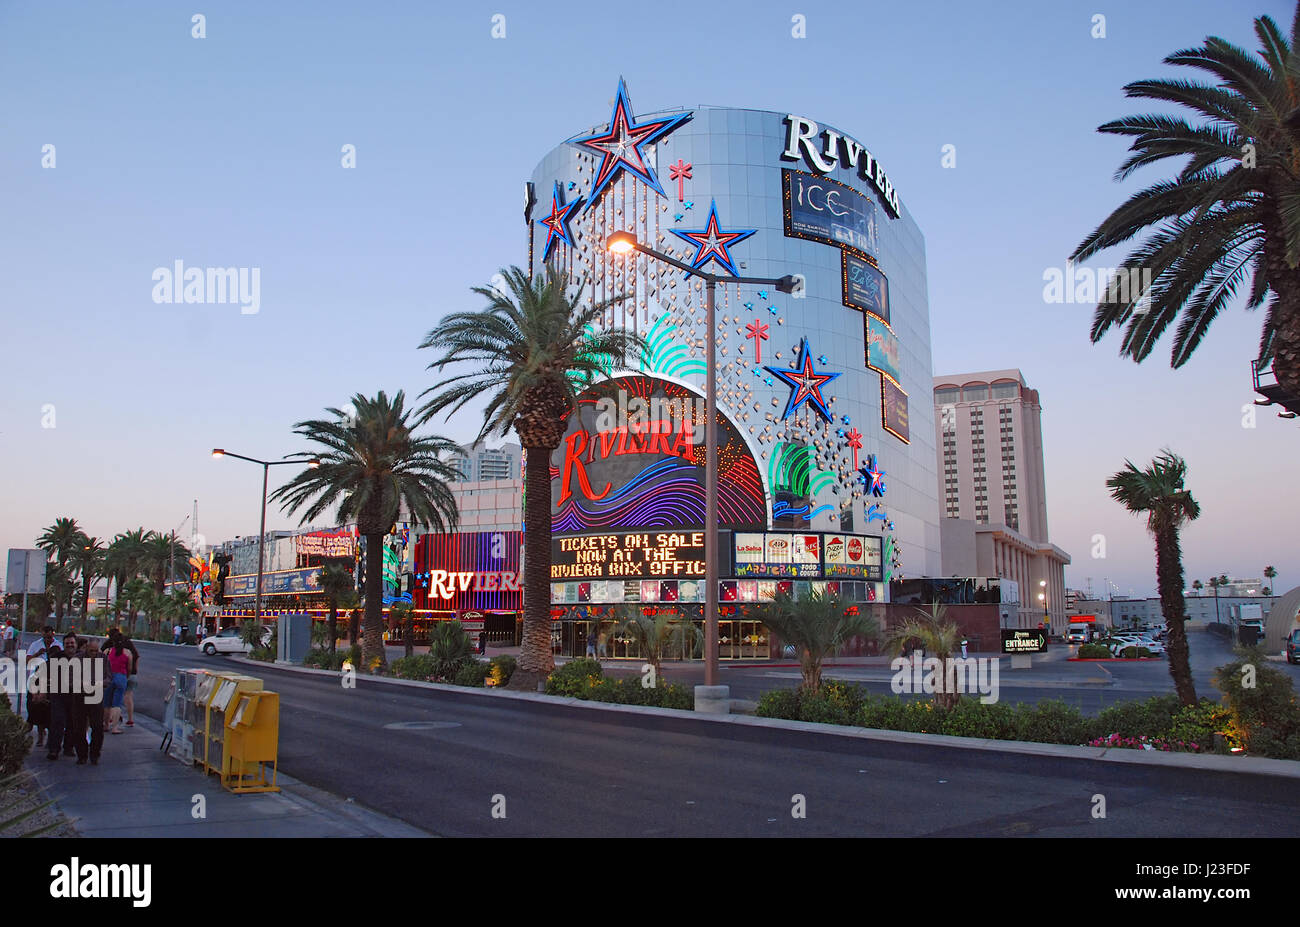 Riviera Hotel & Casino, Las Vegas 